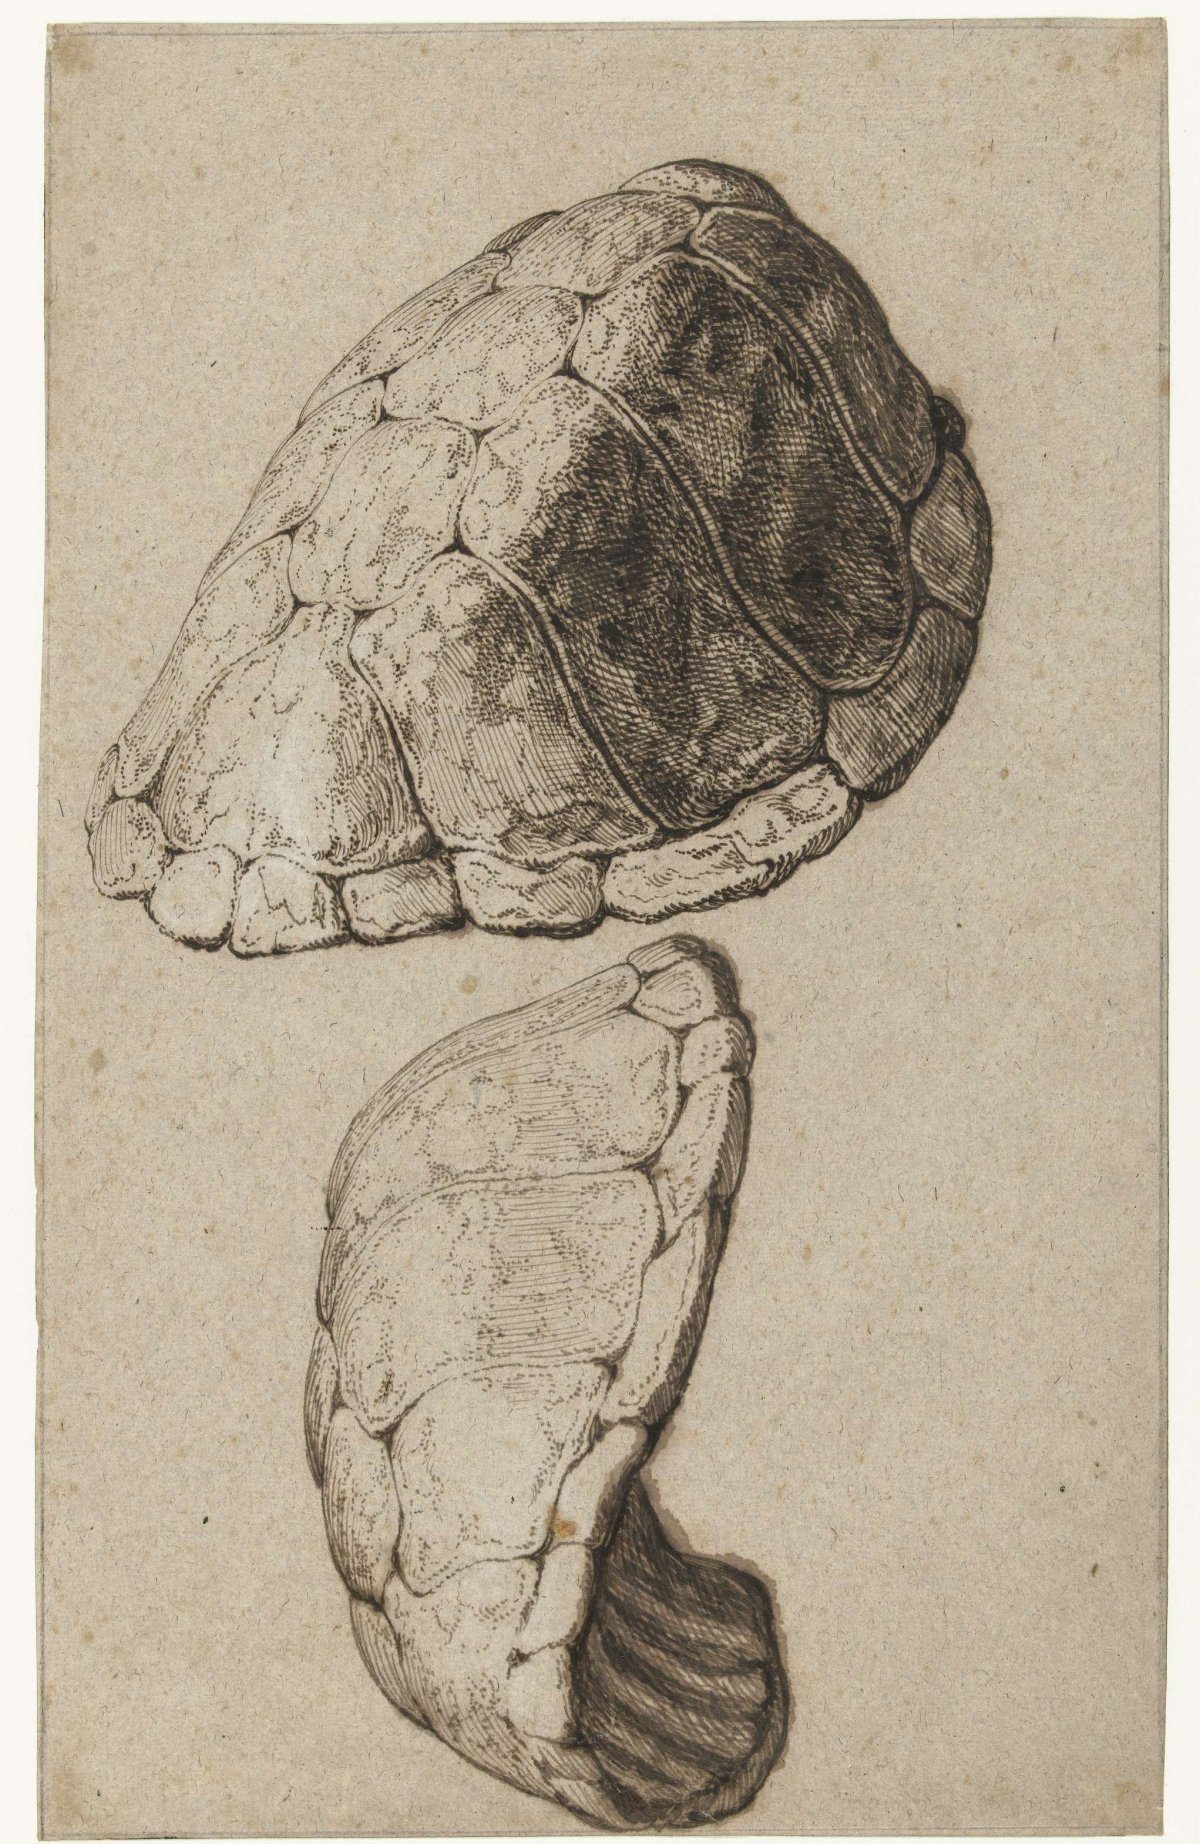 Study of a shell of a tortoise, Jacques de Gheyn (III), c. 1615